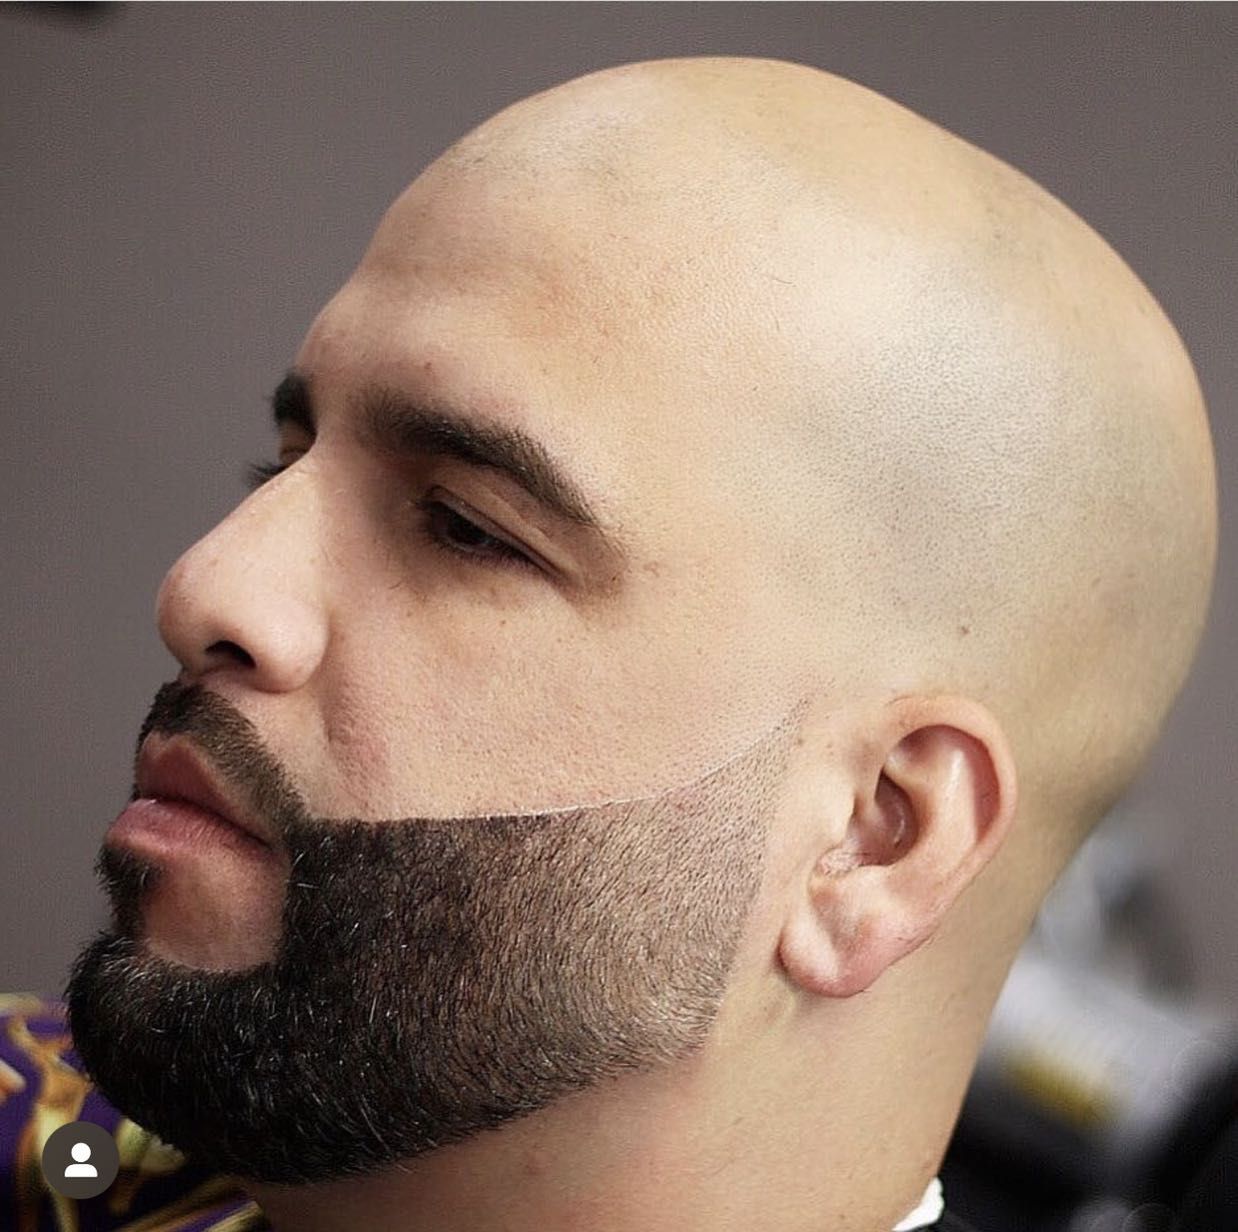 Bald shave portfolio